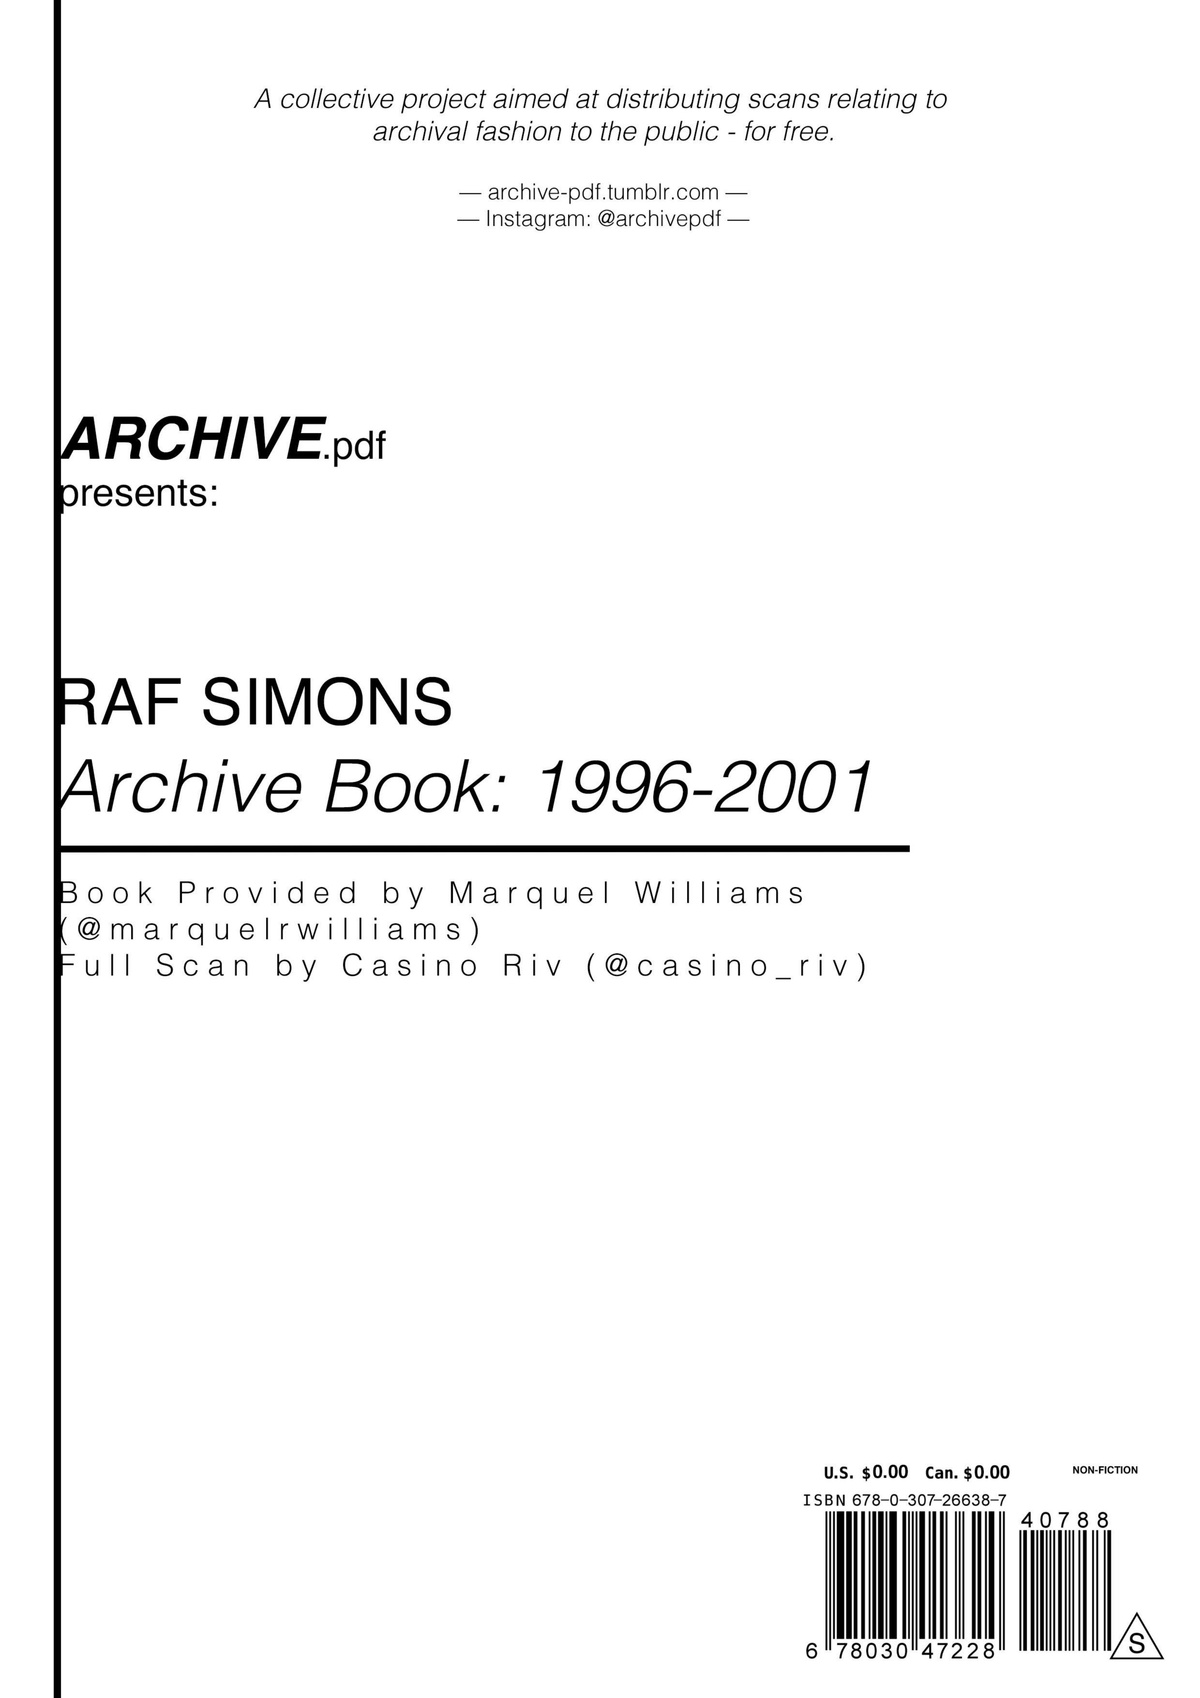 Raf Simons Archive on Tumblr